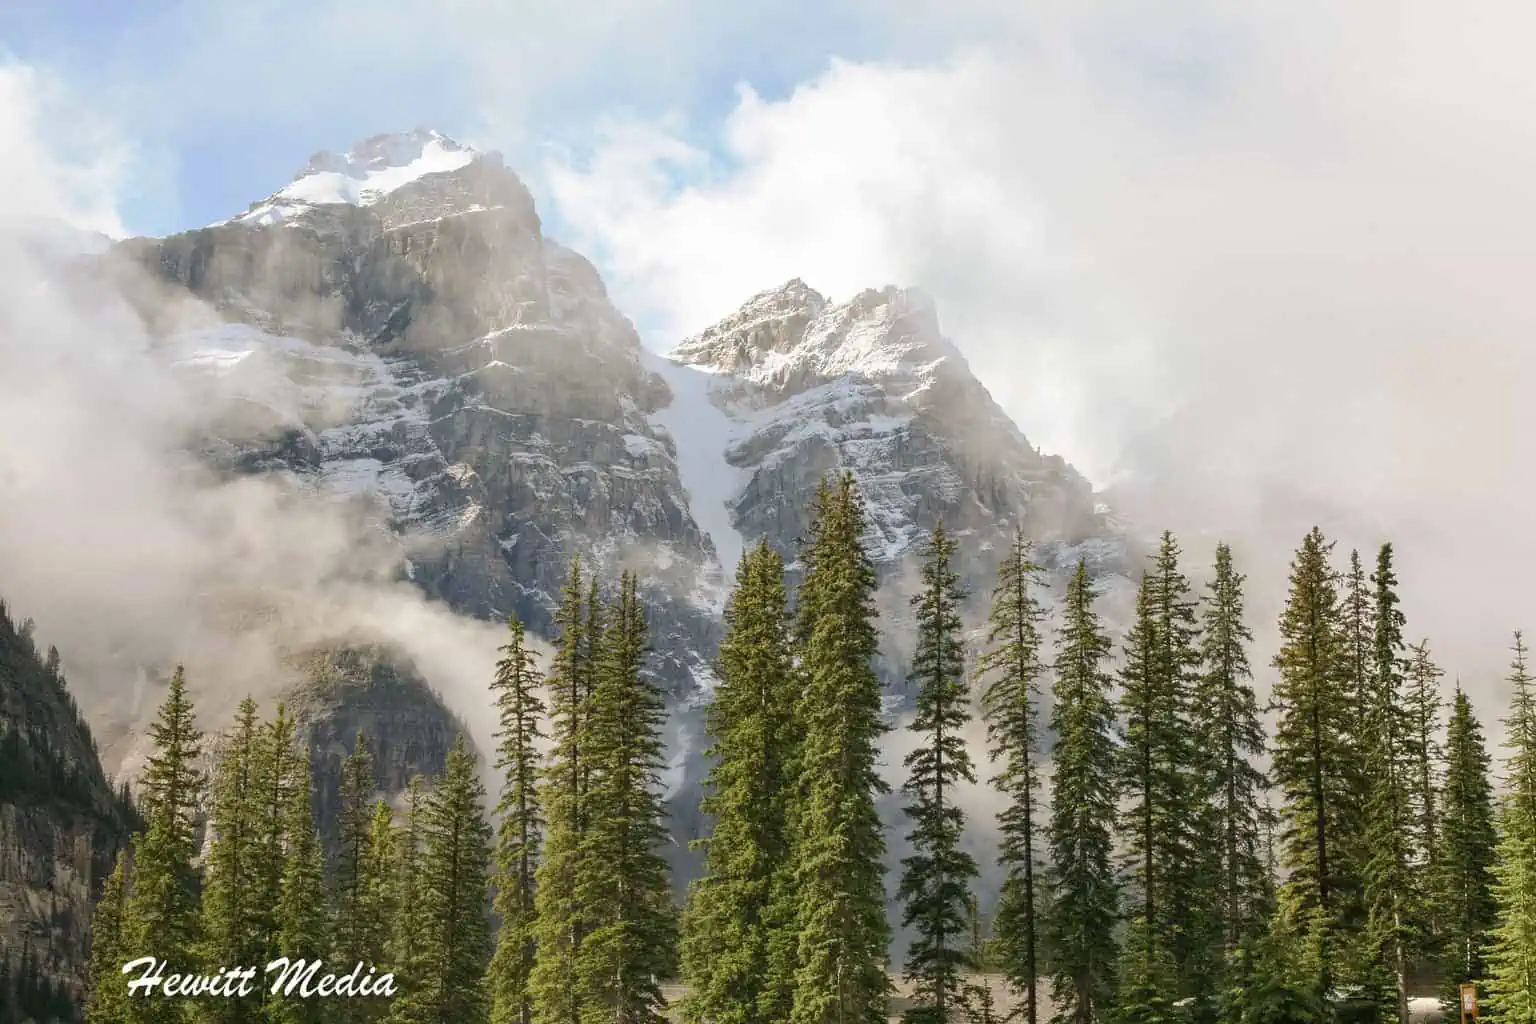 Banff Canada Area Travel Guide